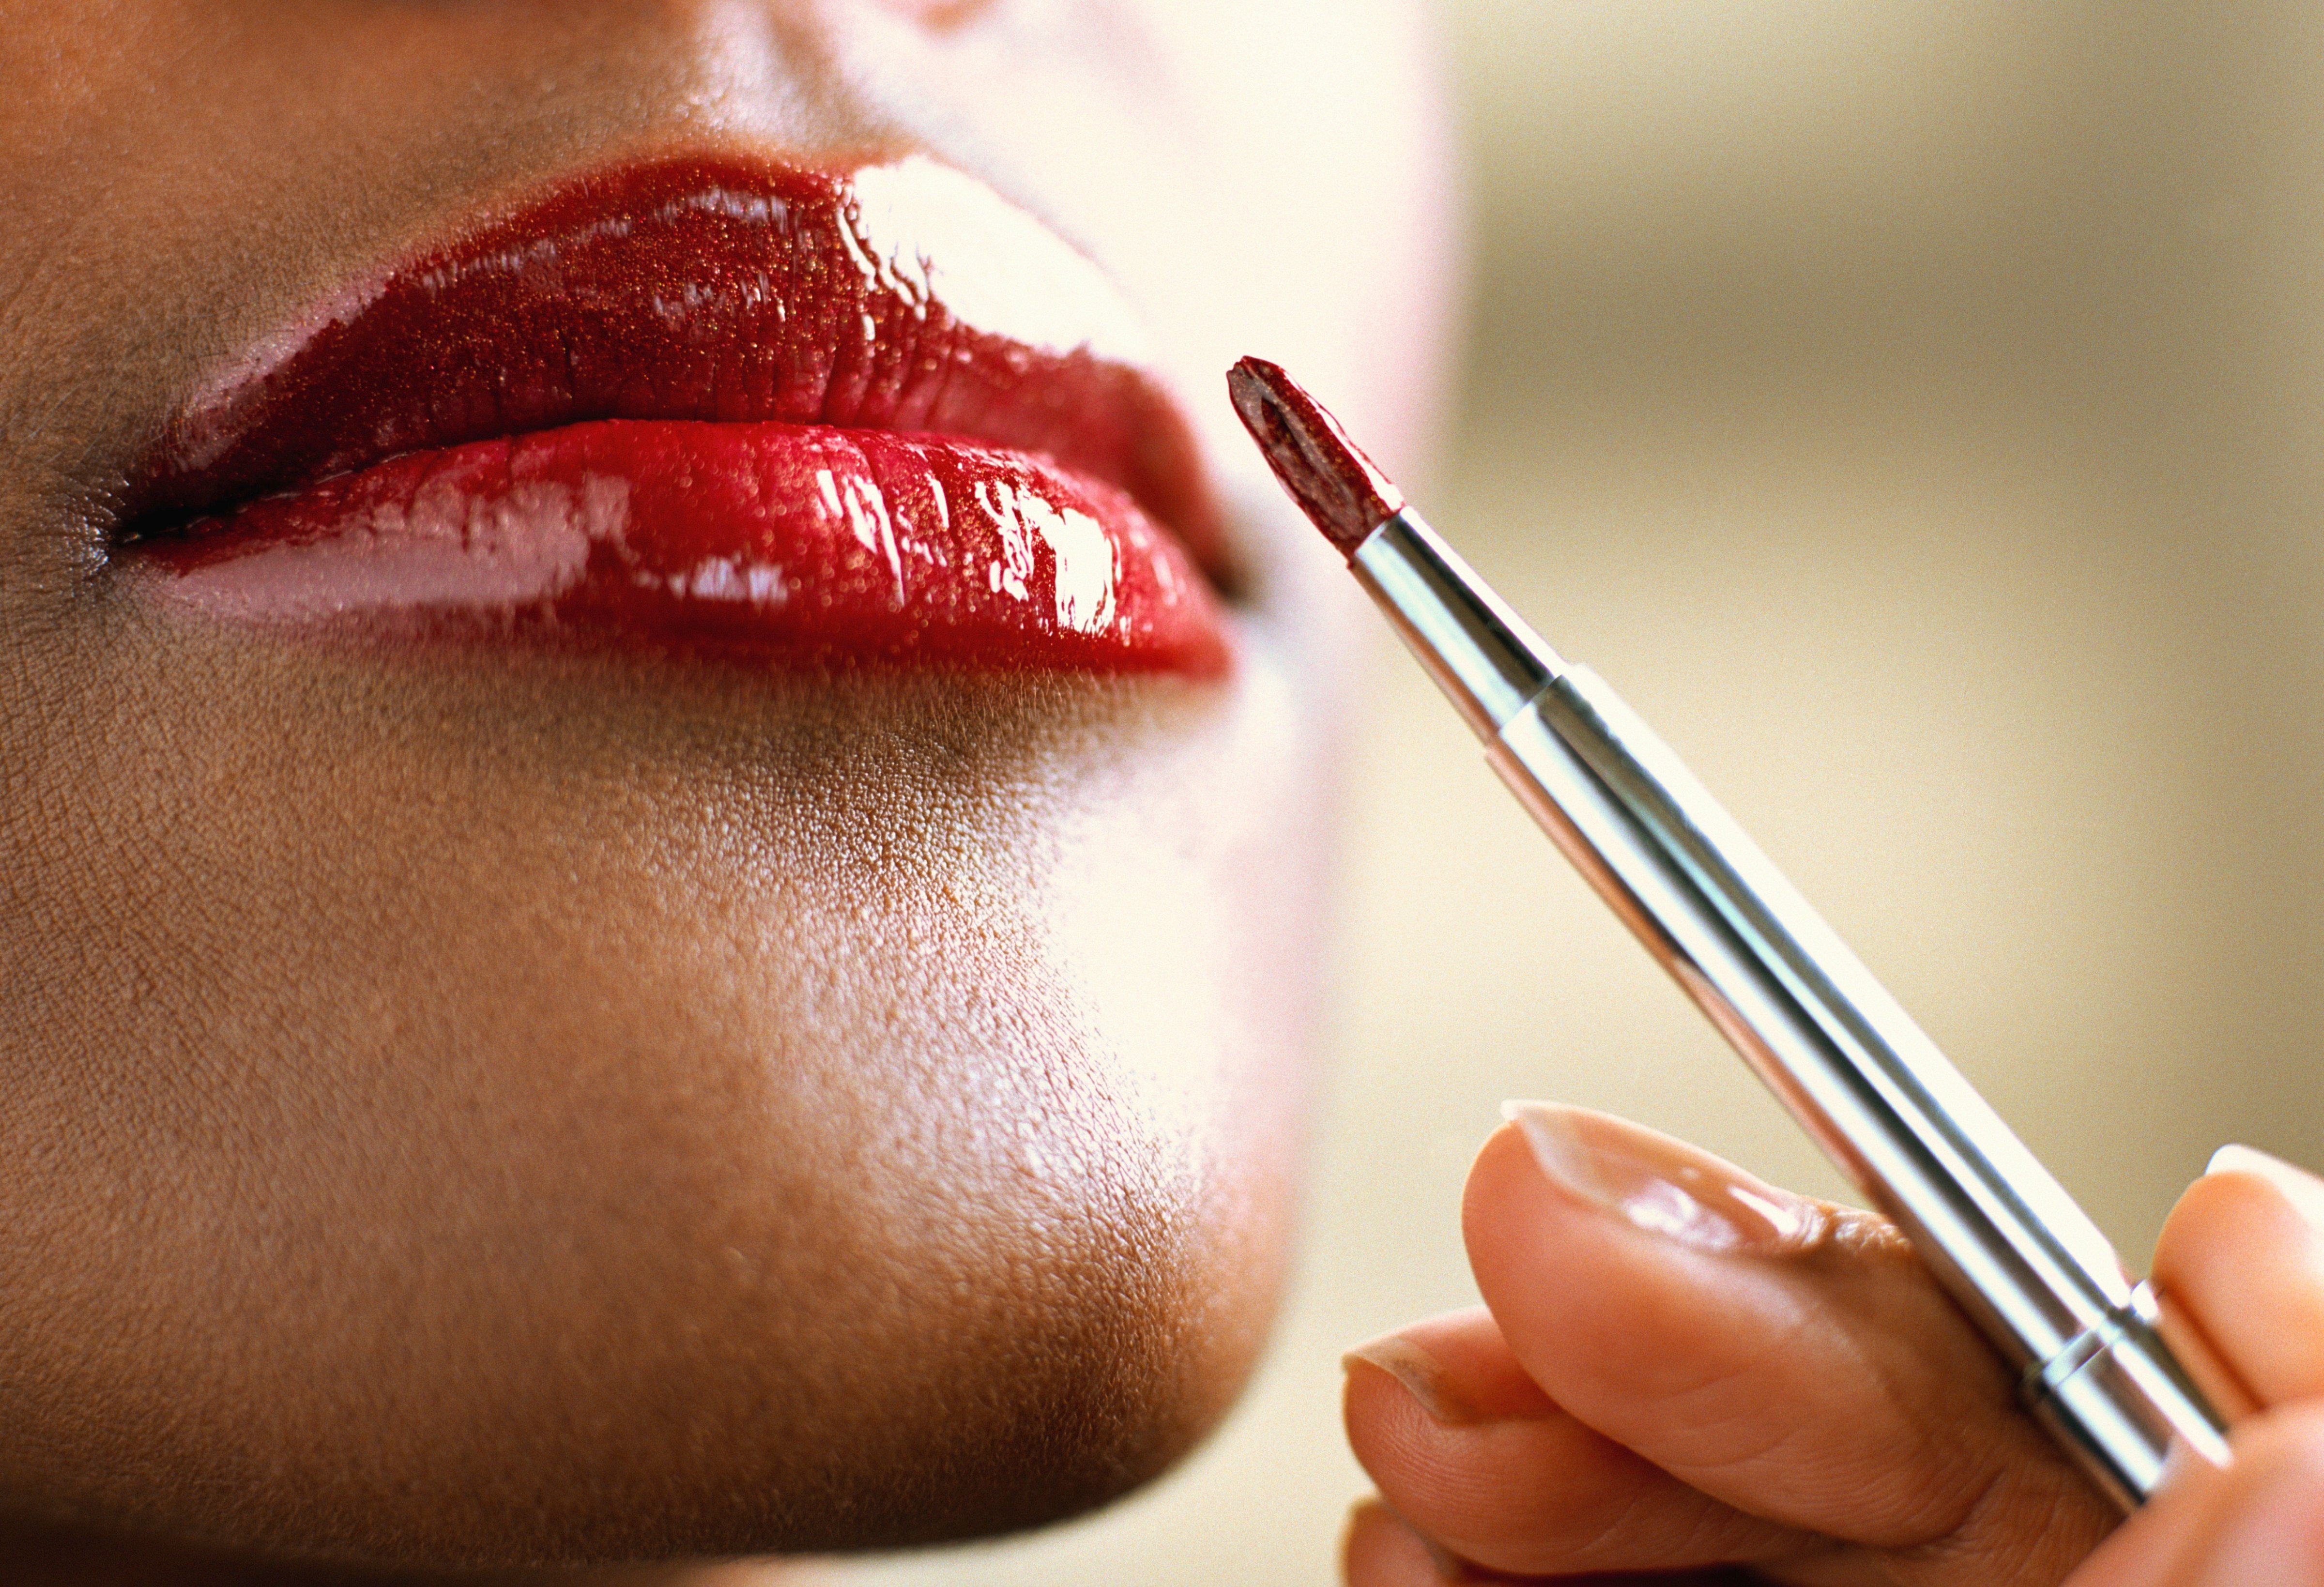 Woman applying lipstick with brush, close-up (John Slater&mdash;Getty Images)